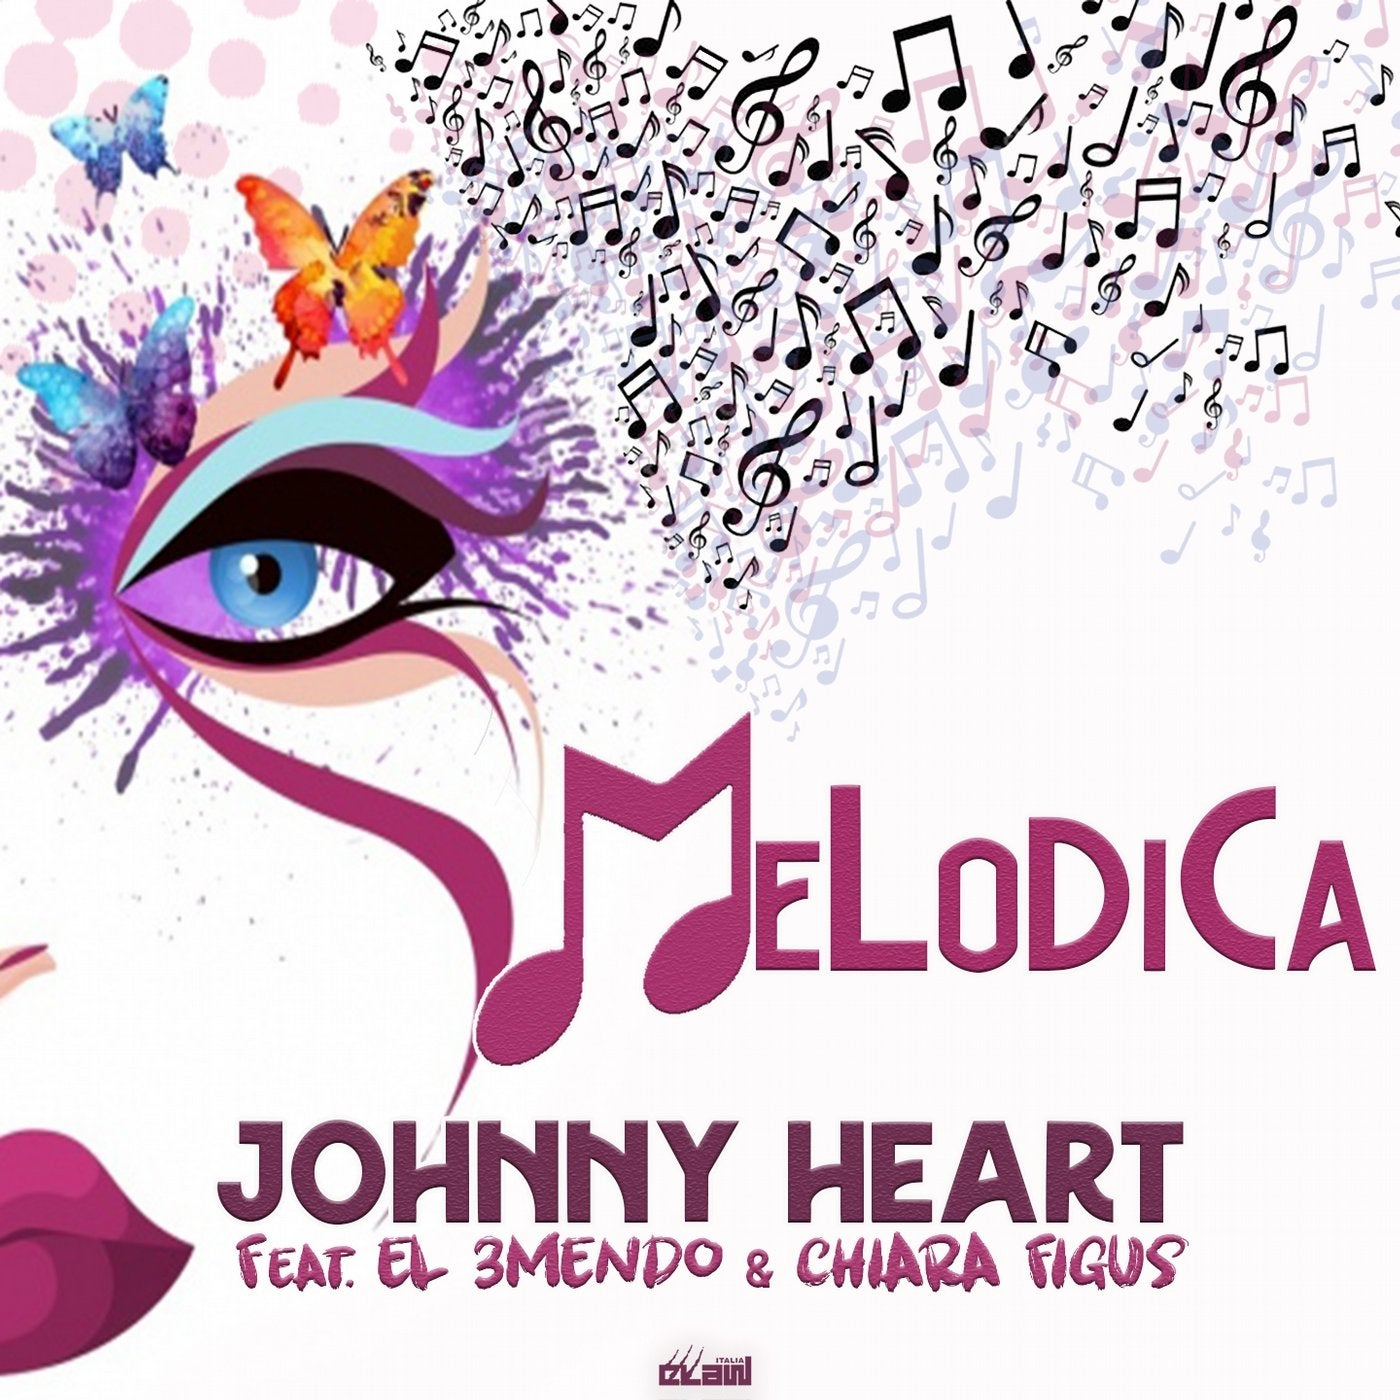 Melodica (feat. El 3mendo, Chiara Figus)